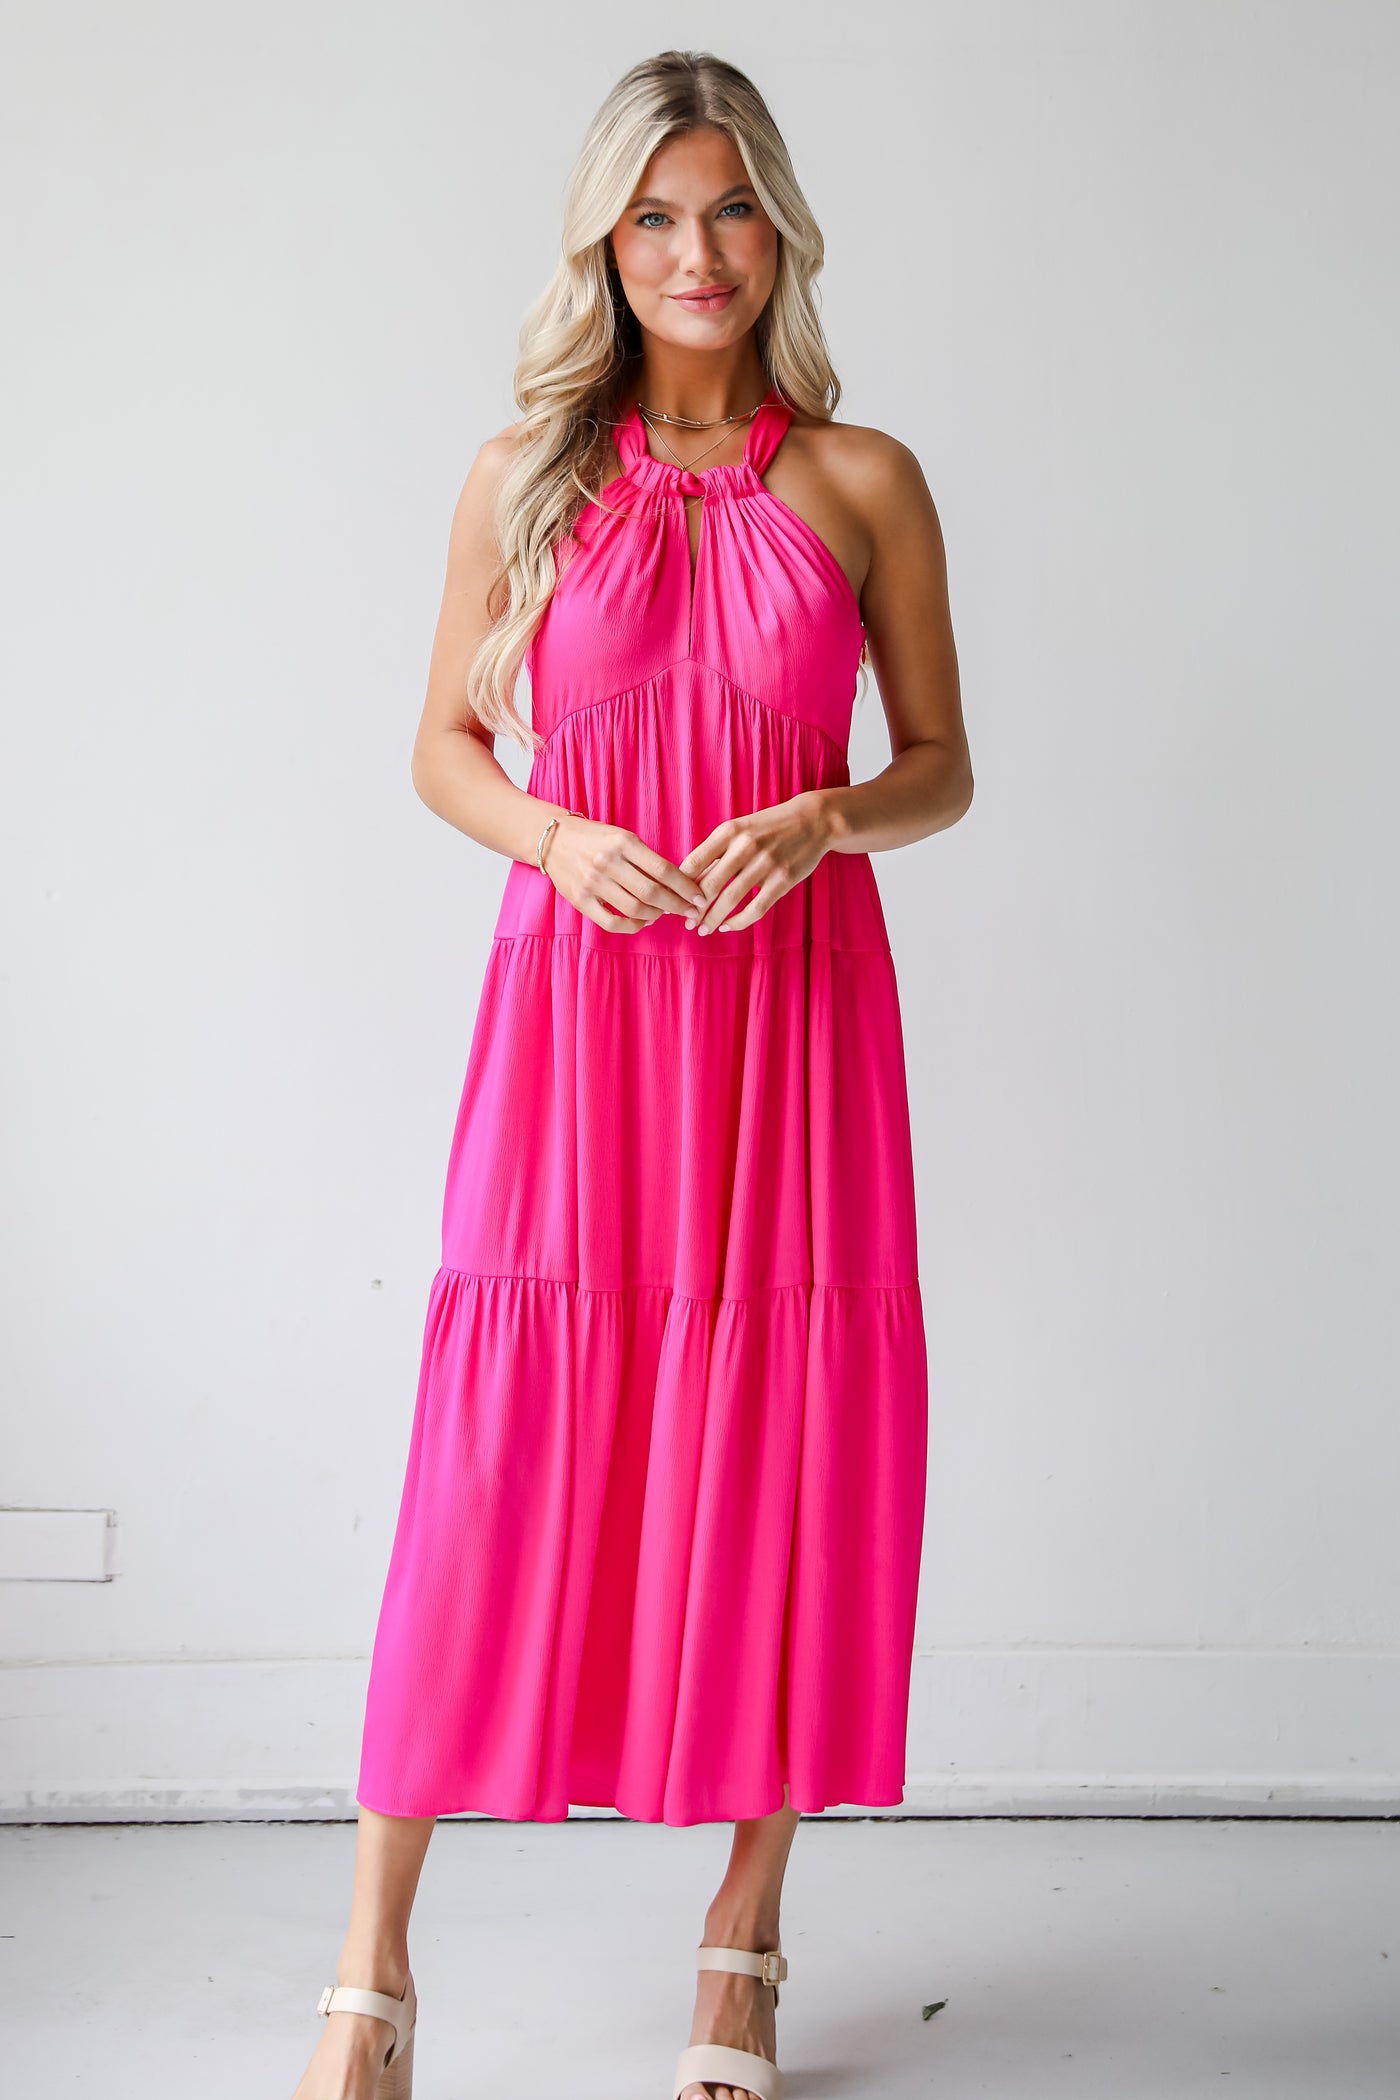 cute pink Satin Tiered Maxi Dress